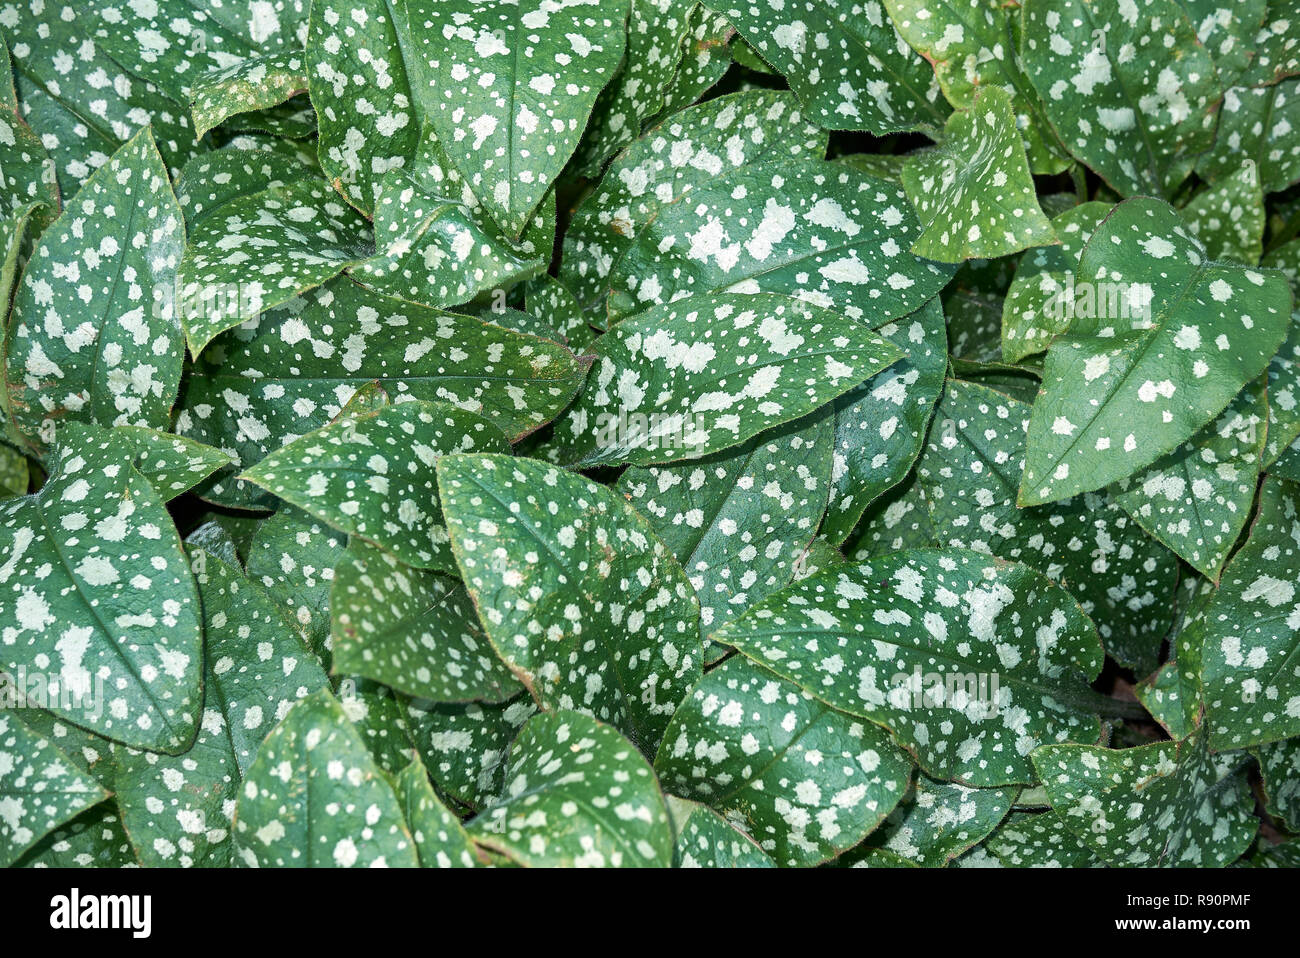 Pulmonaria saccharata spotted leaves Stock Photo